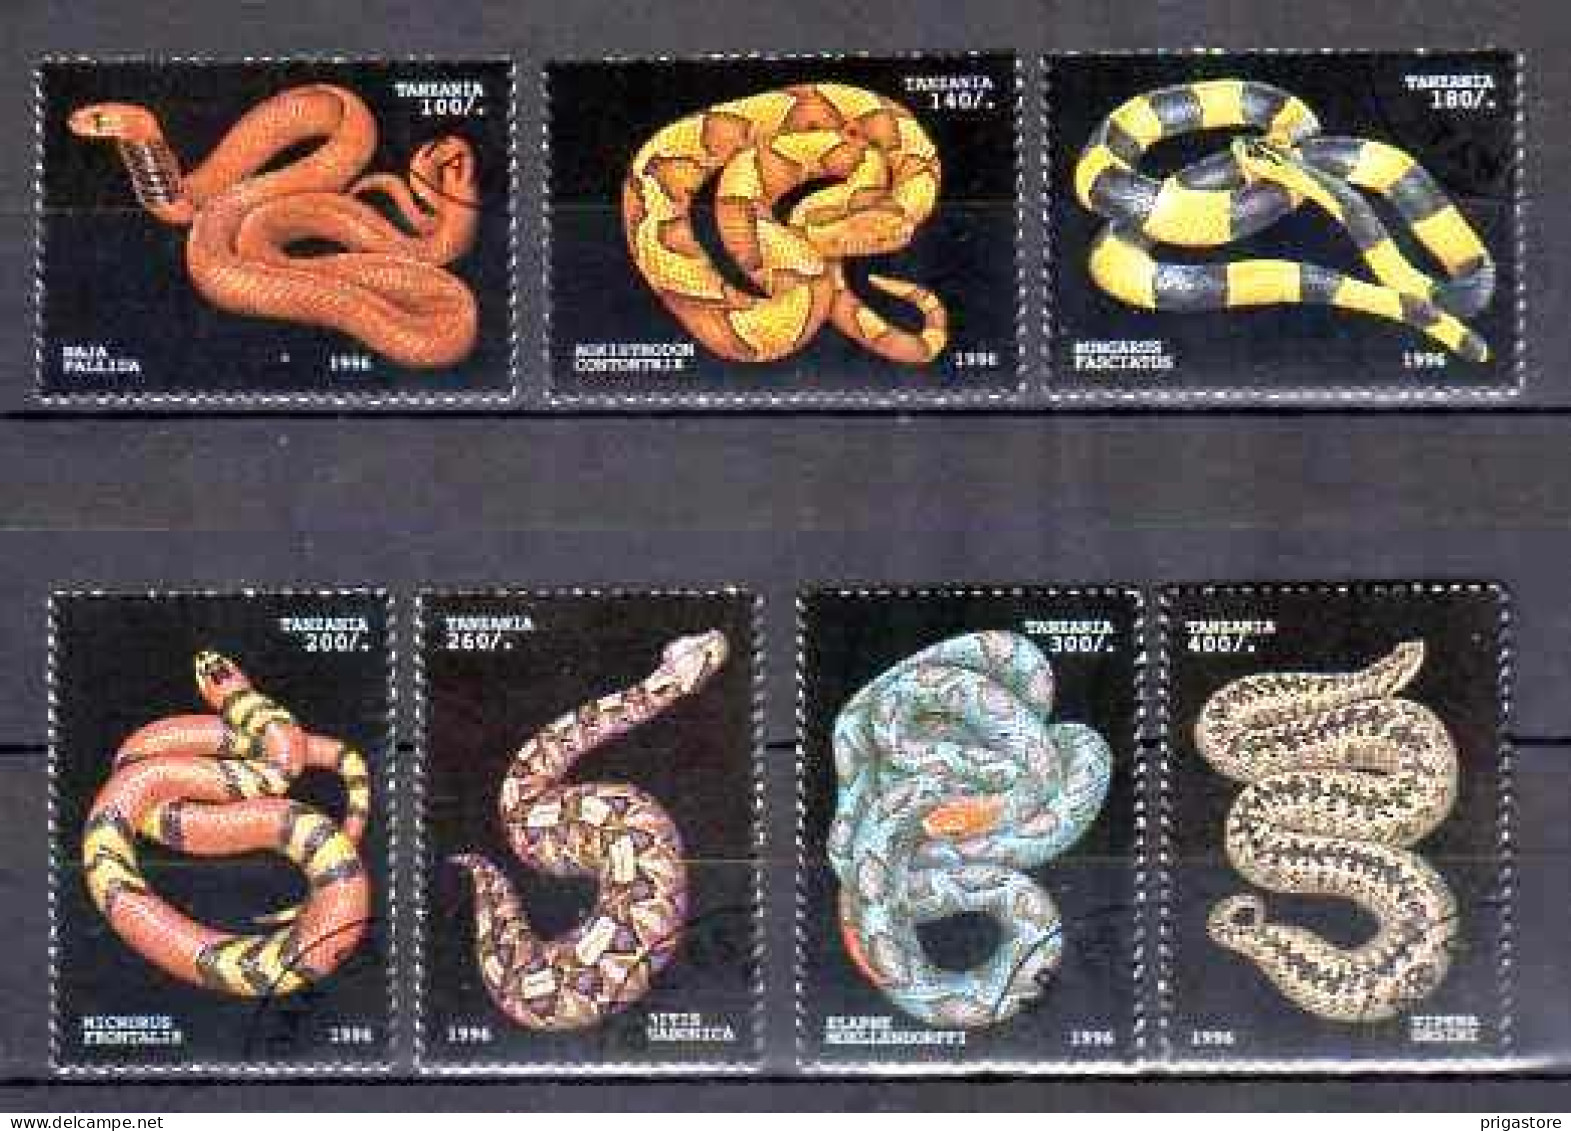 Animaux Serpents Tanzanie 1996 (48) Yvert N° 1969 à 1975 Oblitérés Used - Snakes